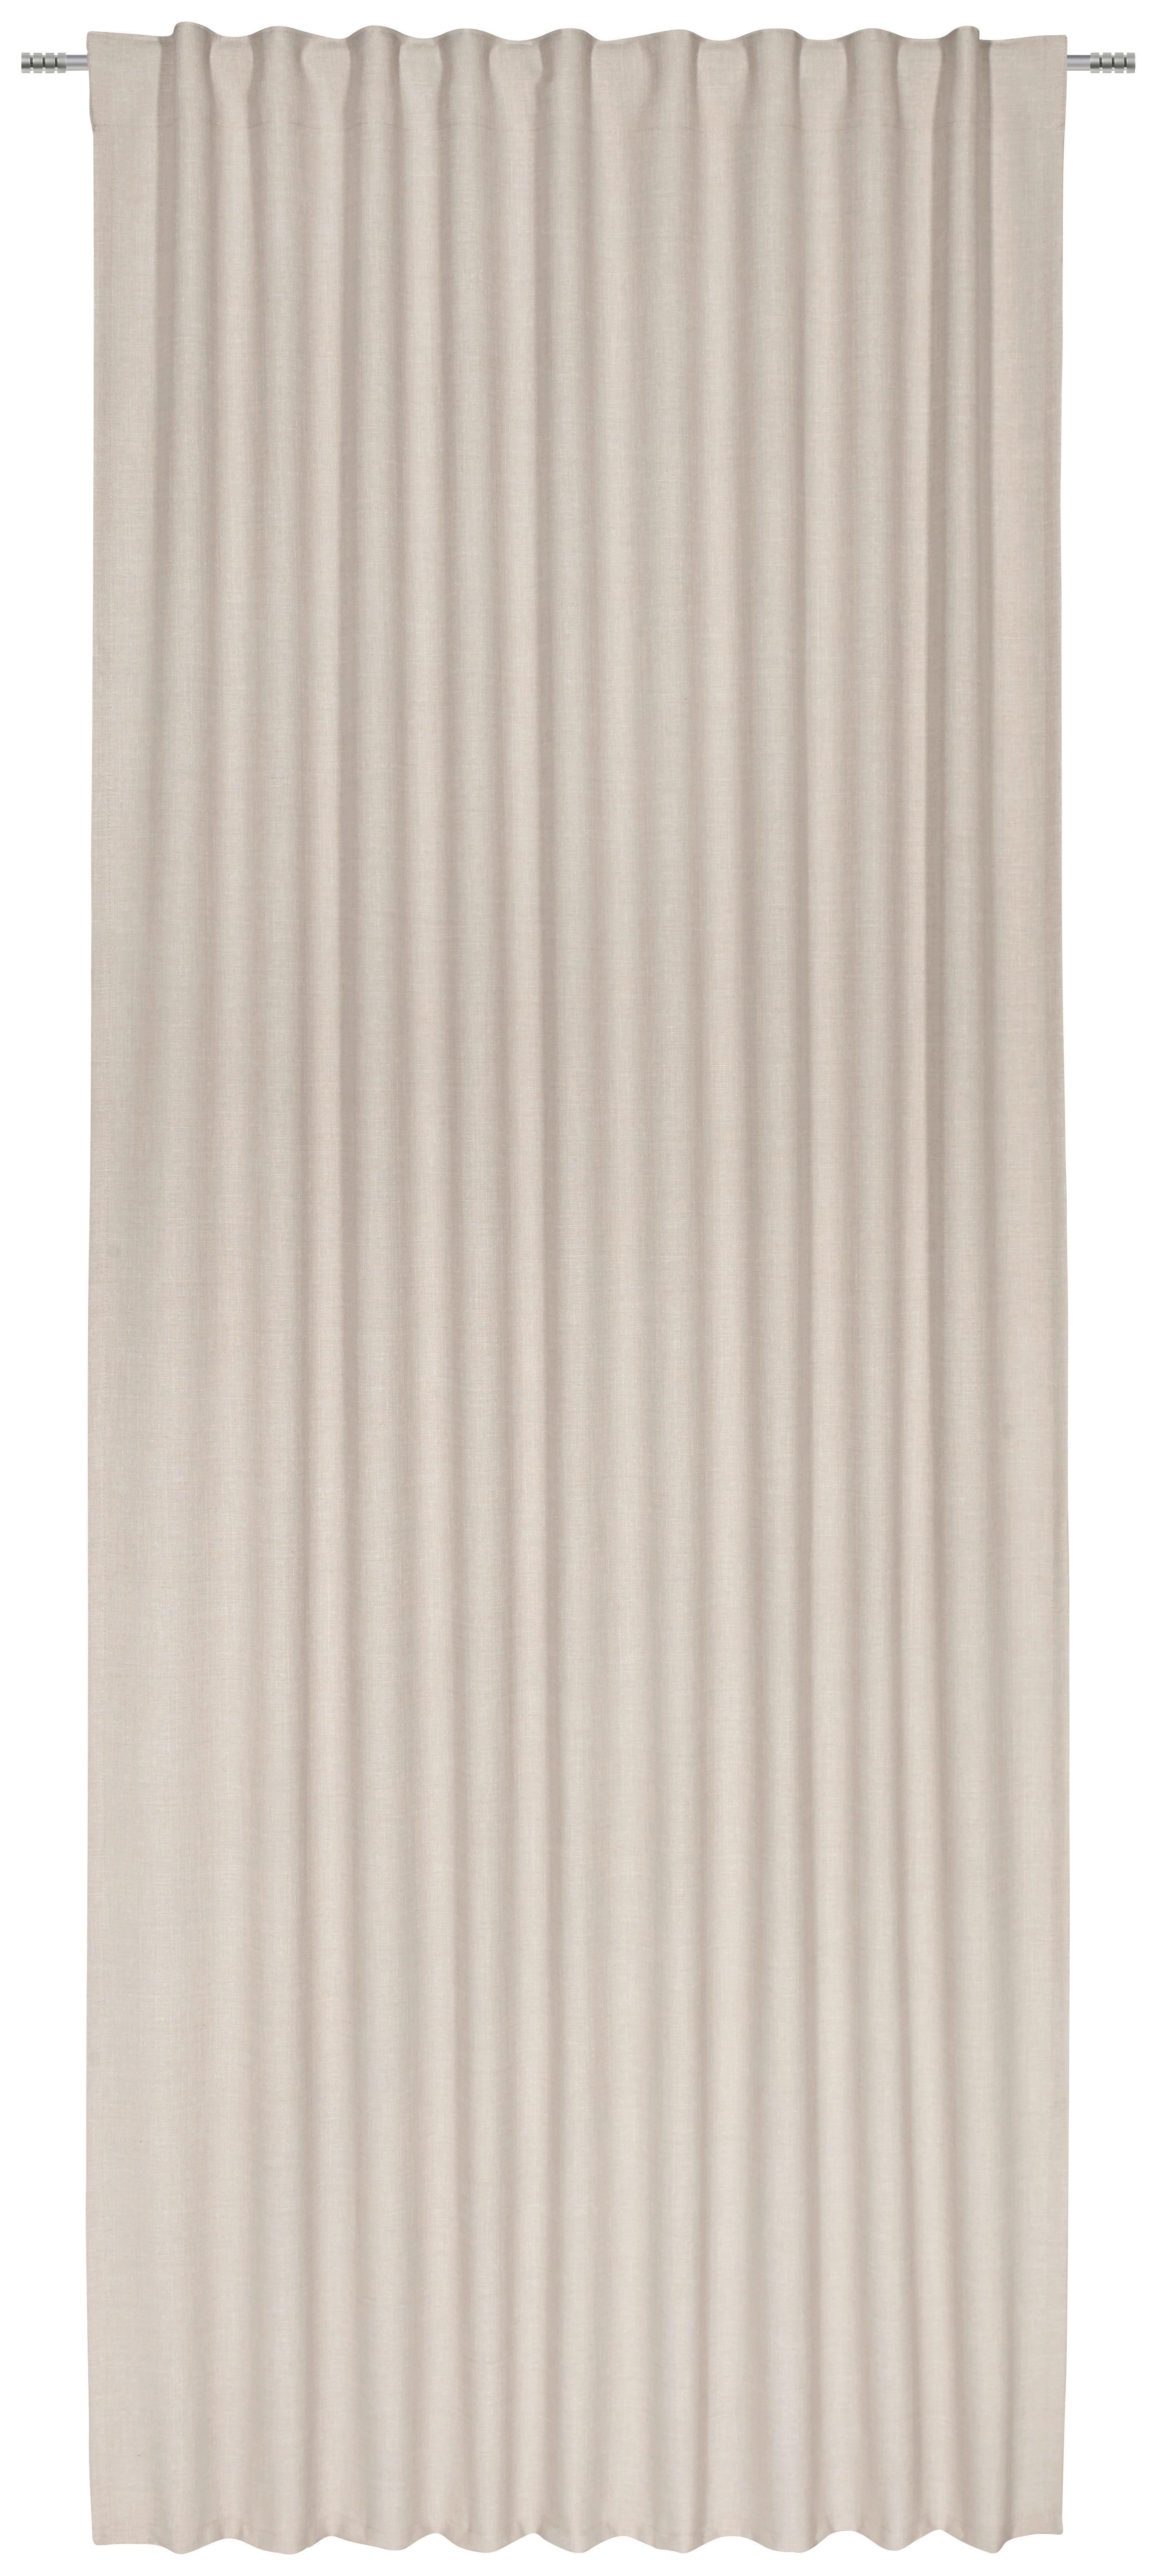 Fertigvorhang Leo Sand 135x255cm - Sandfarben, Textil (135/255cm) - Premium Living